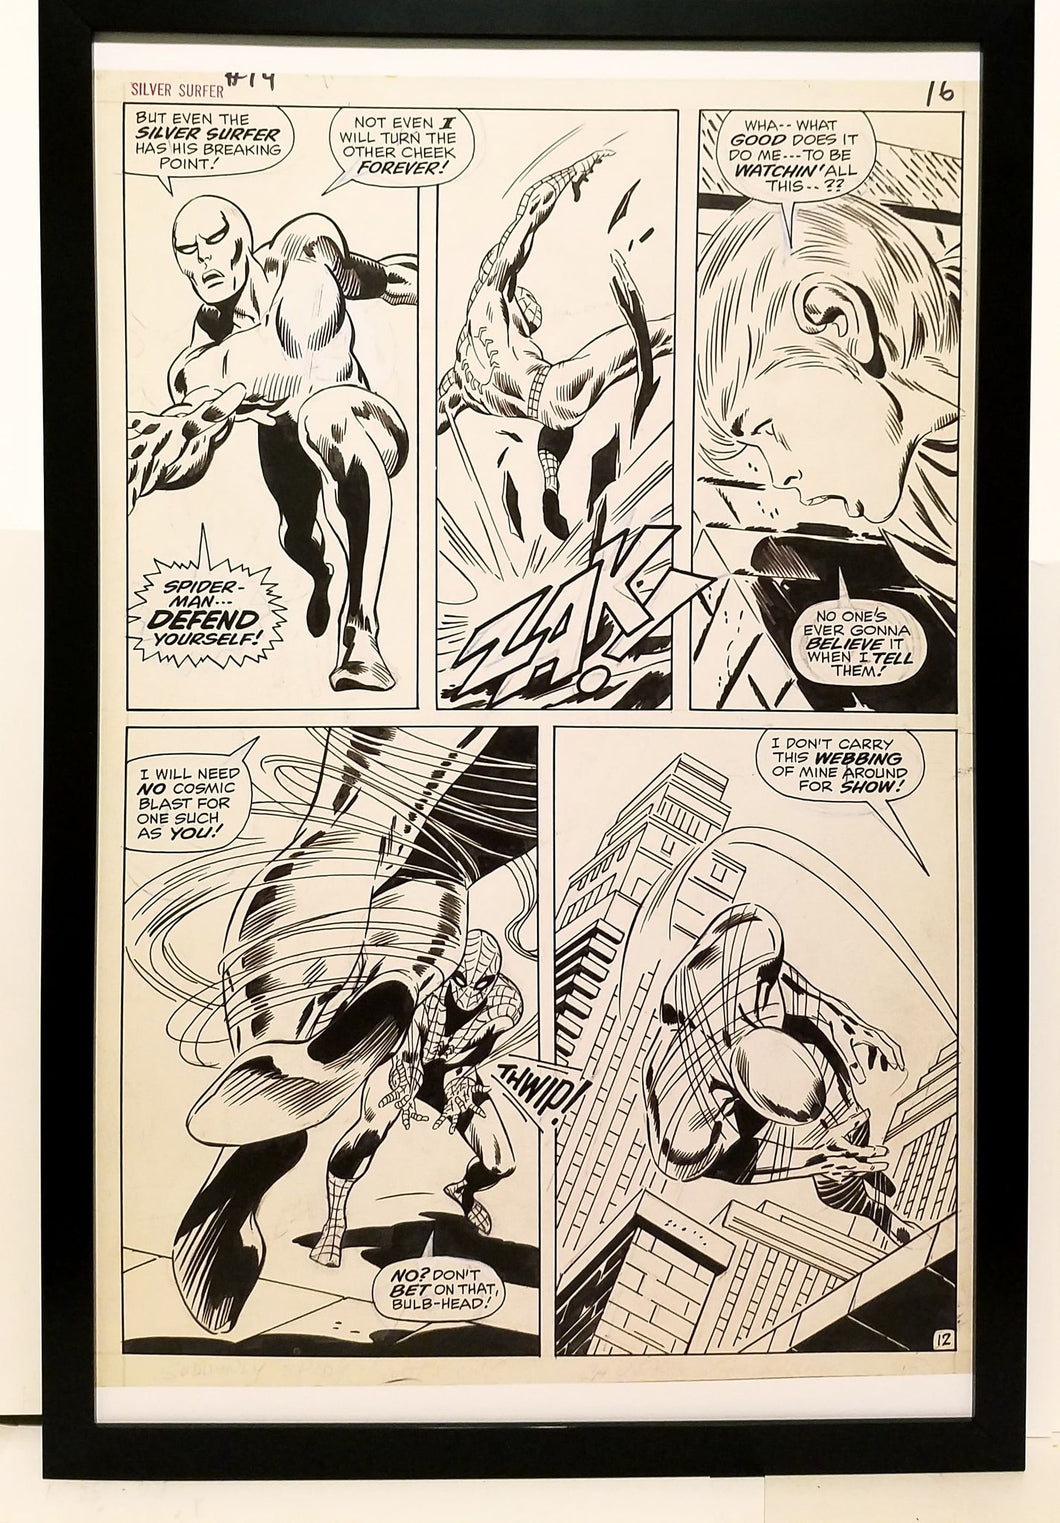 Silver Surfer #14 pg. 12 by John Buscema 11x17 FRAMED Original Art Poster Marvel Comics